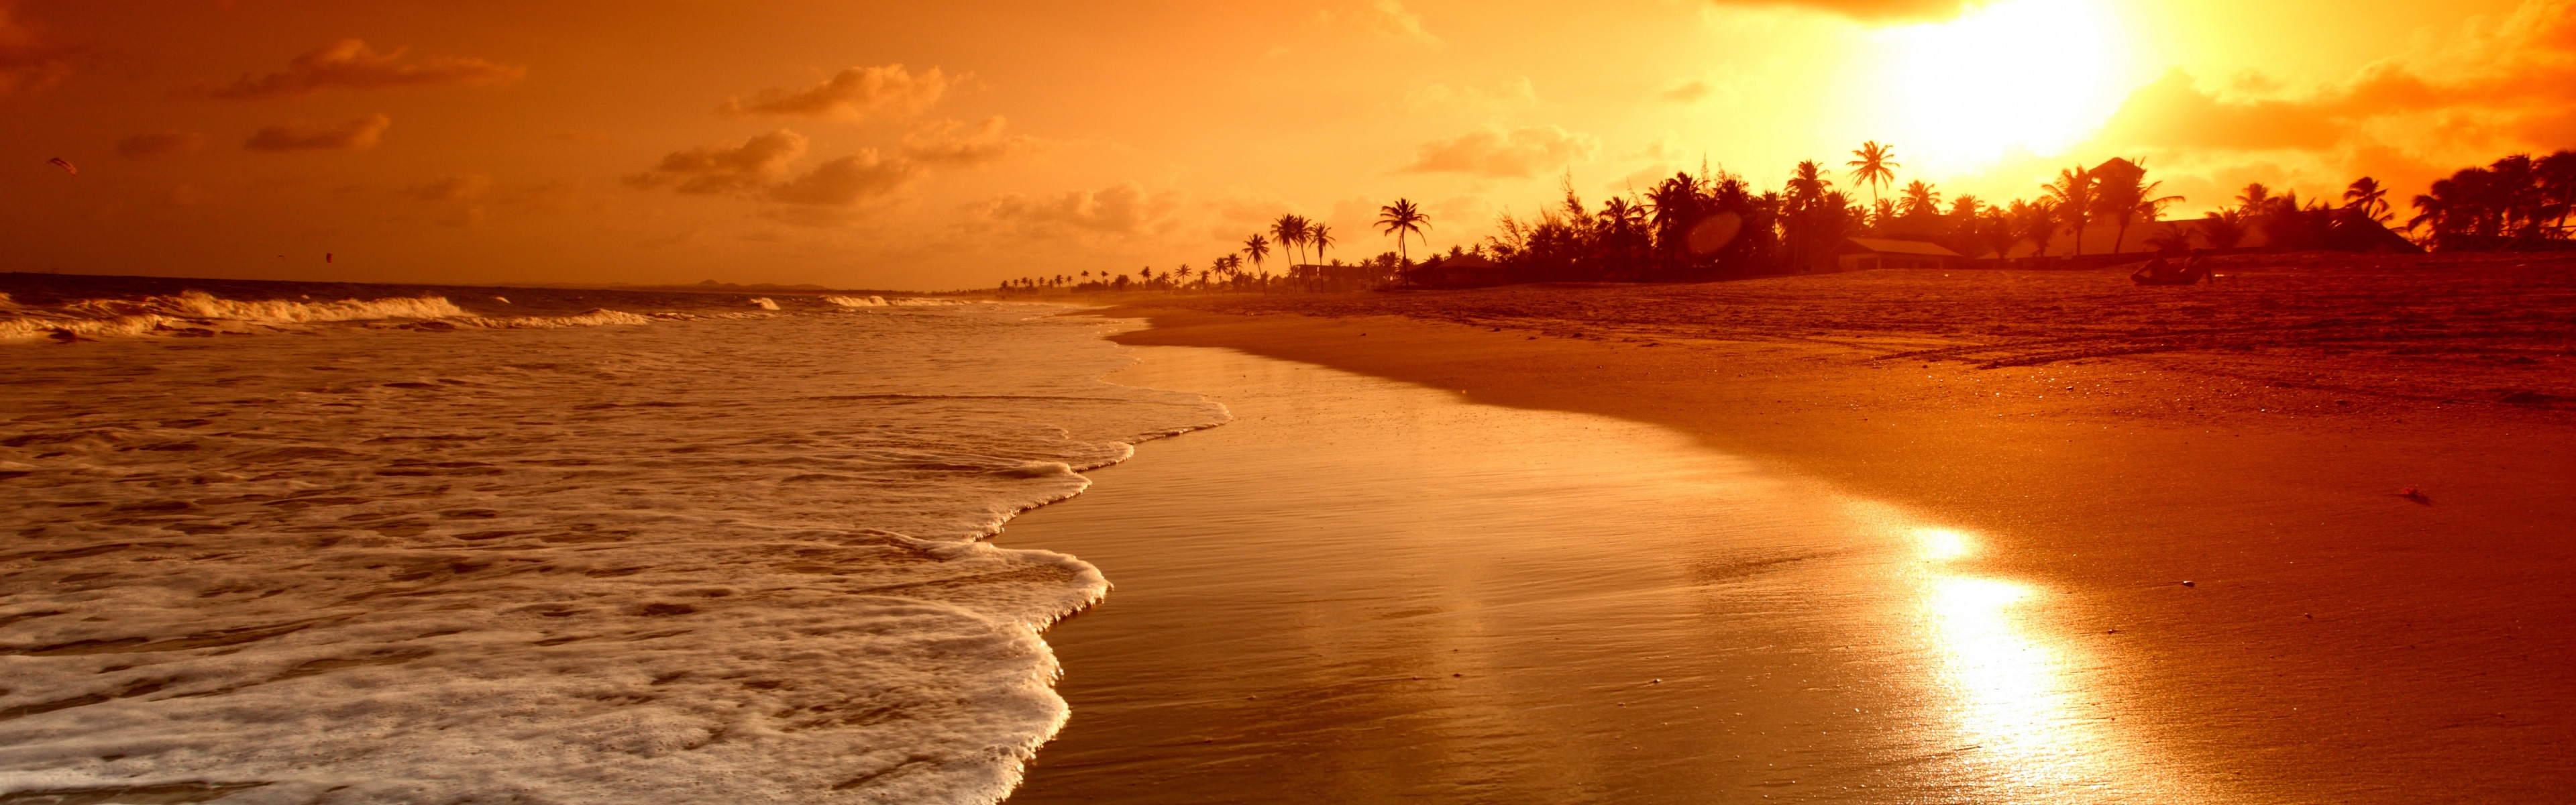 Beach Sunrise iPhone Panoramic Wallpaper iPad